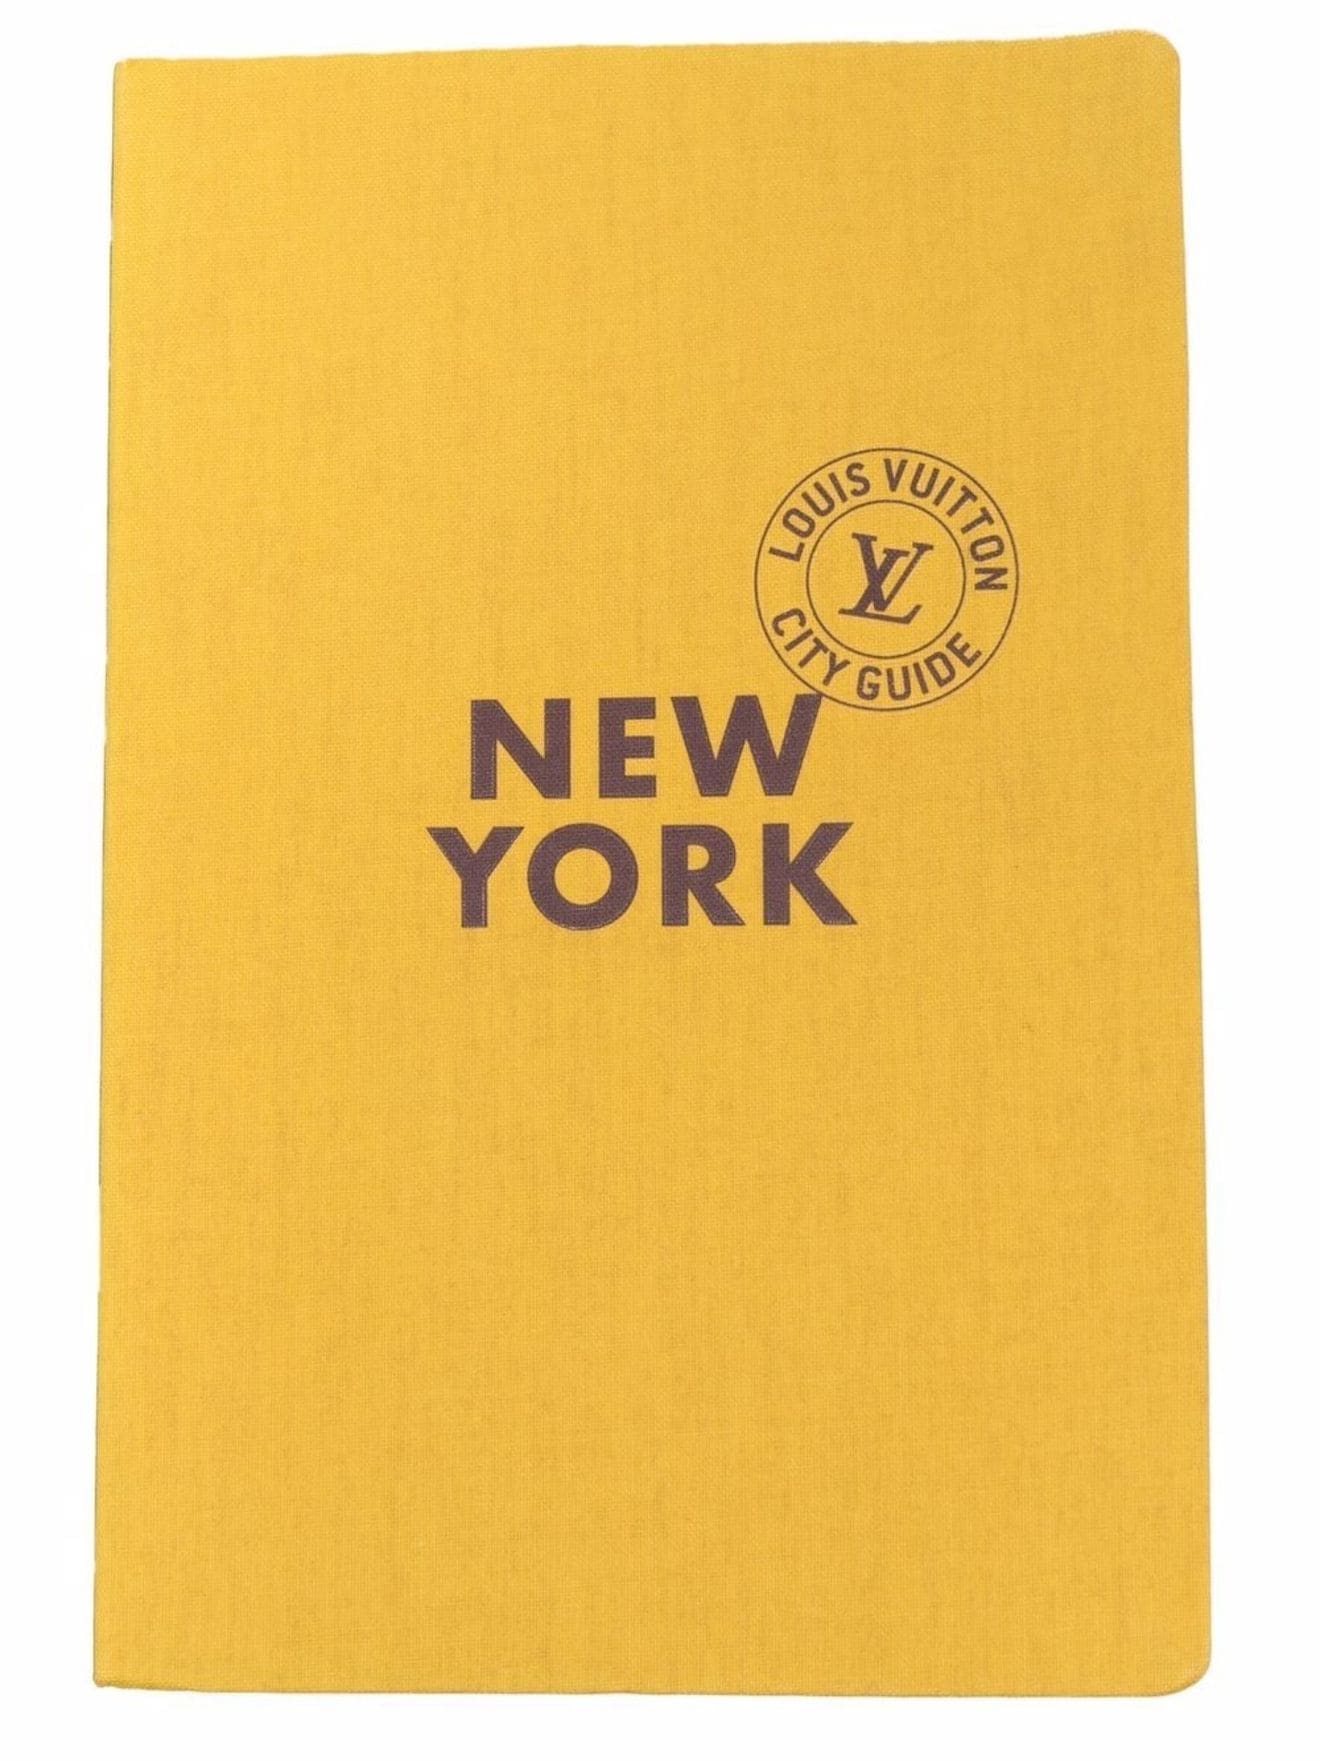 Louis Vuitton New York City Guide book yellow